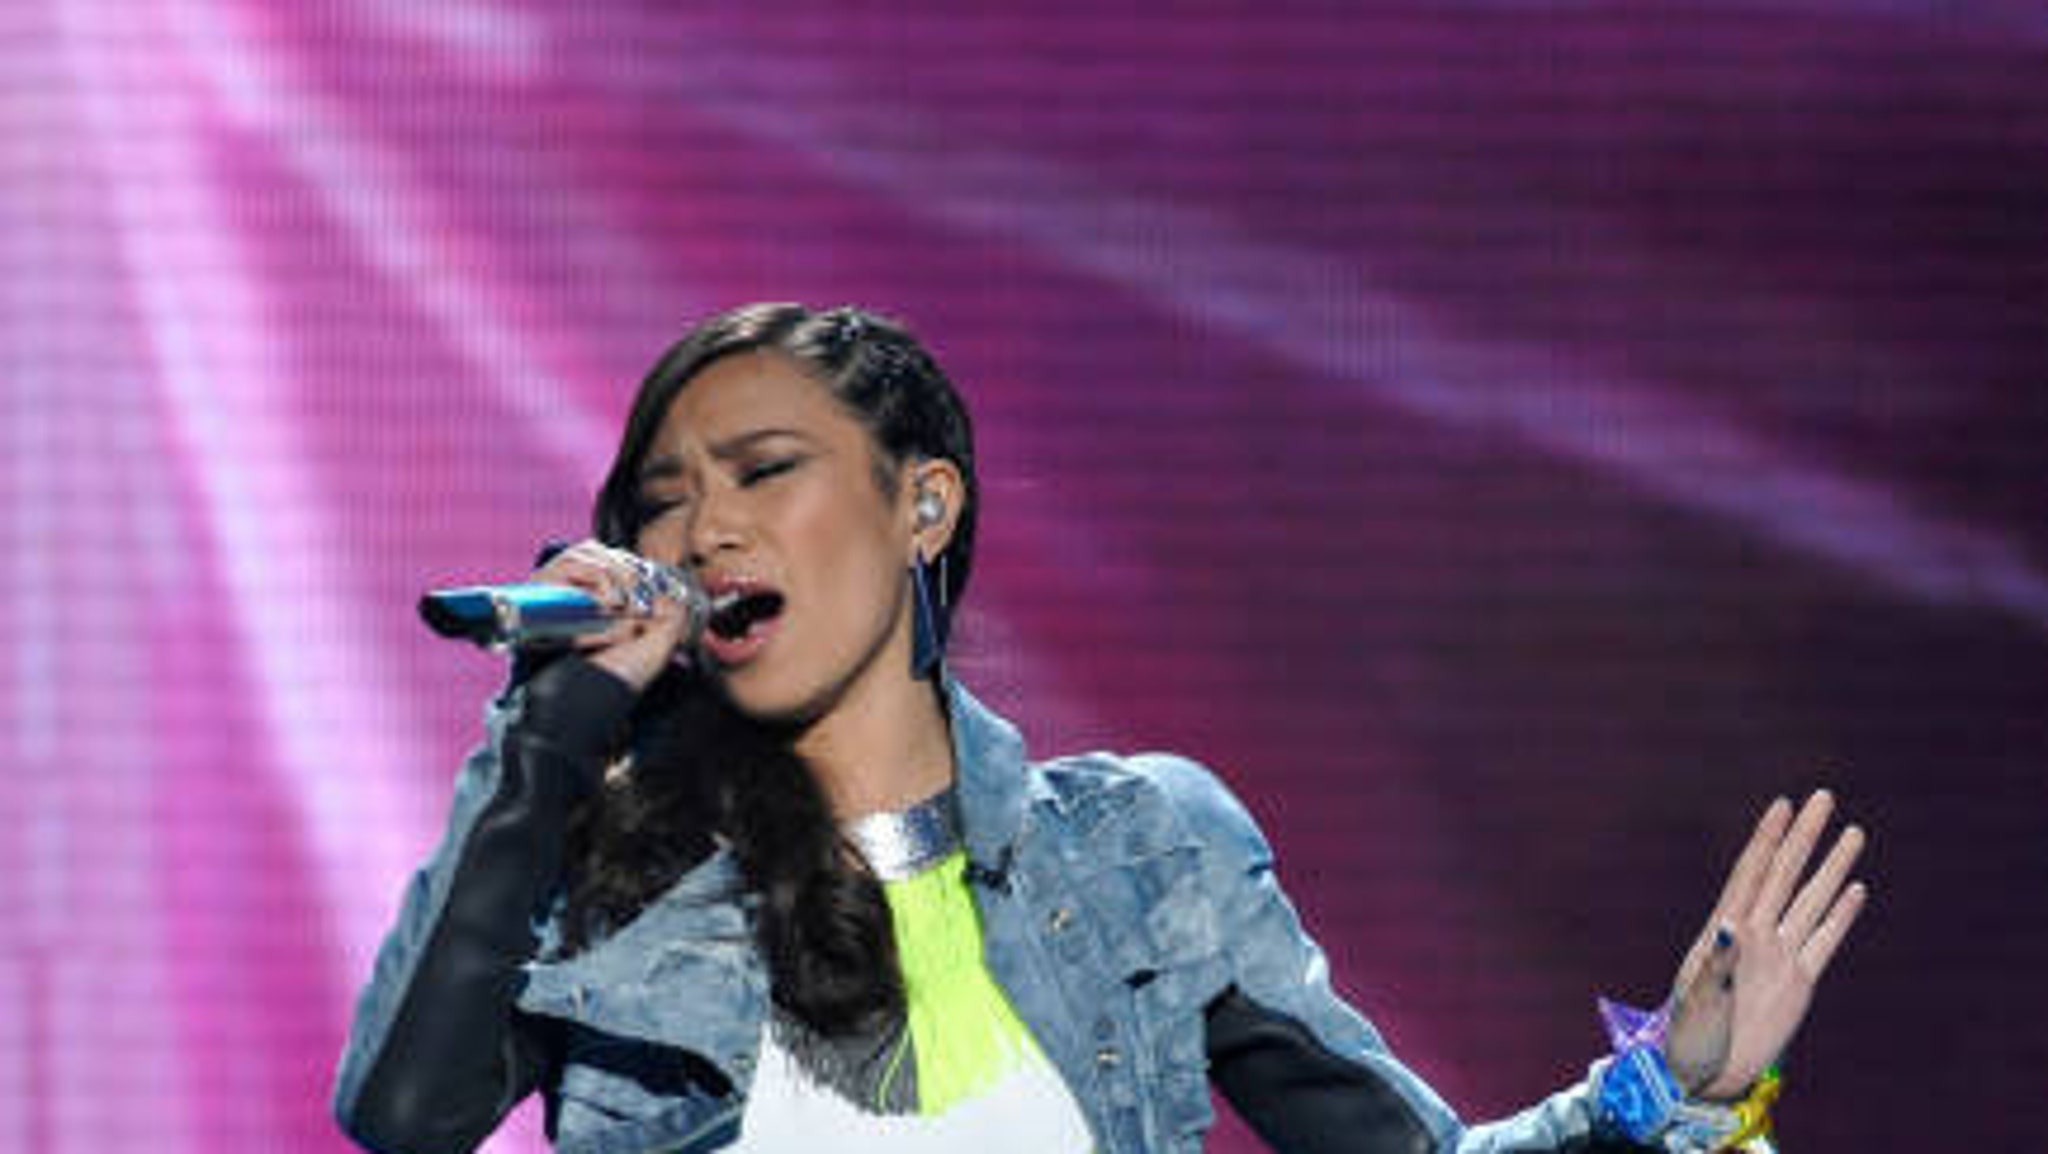 Youngest "American Idol" Hopeful Tackles Whitney Houston Again, Wows